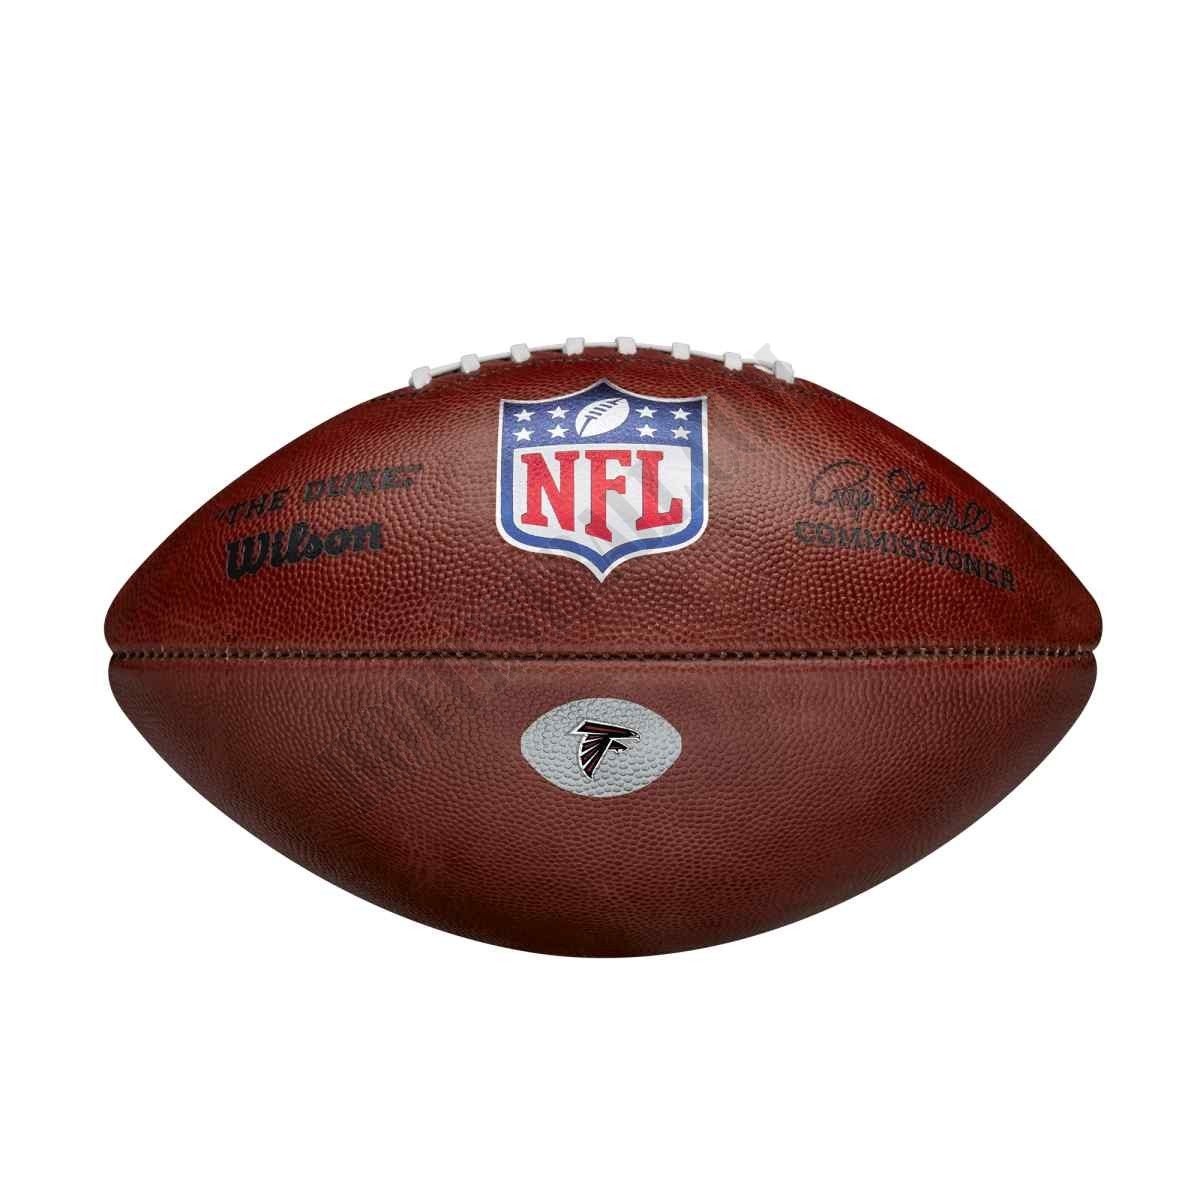 The Duke Decal NFL Football - Atlanta Falcons ● Wilson Promotions - The Duke Decal NFL Football - Atlanta Falcons ● Wilson Promotions